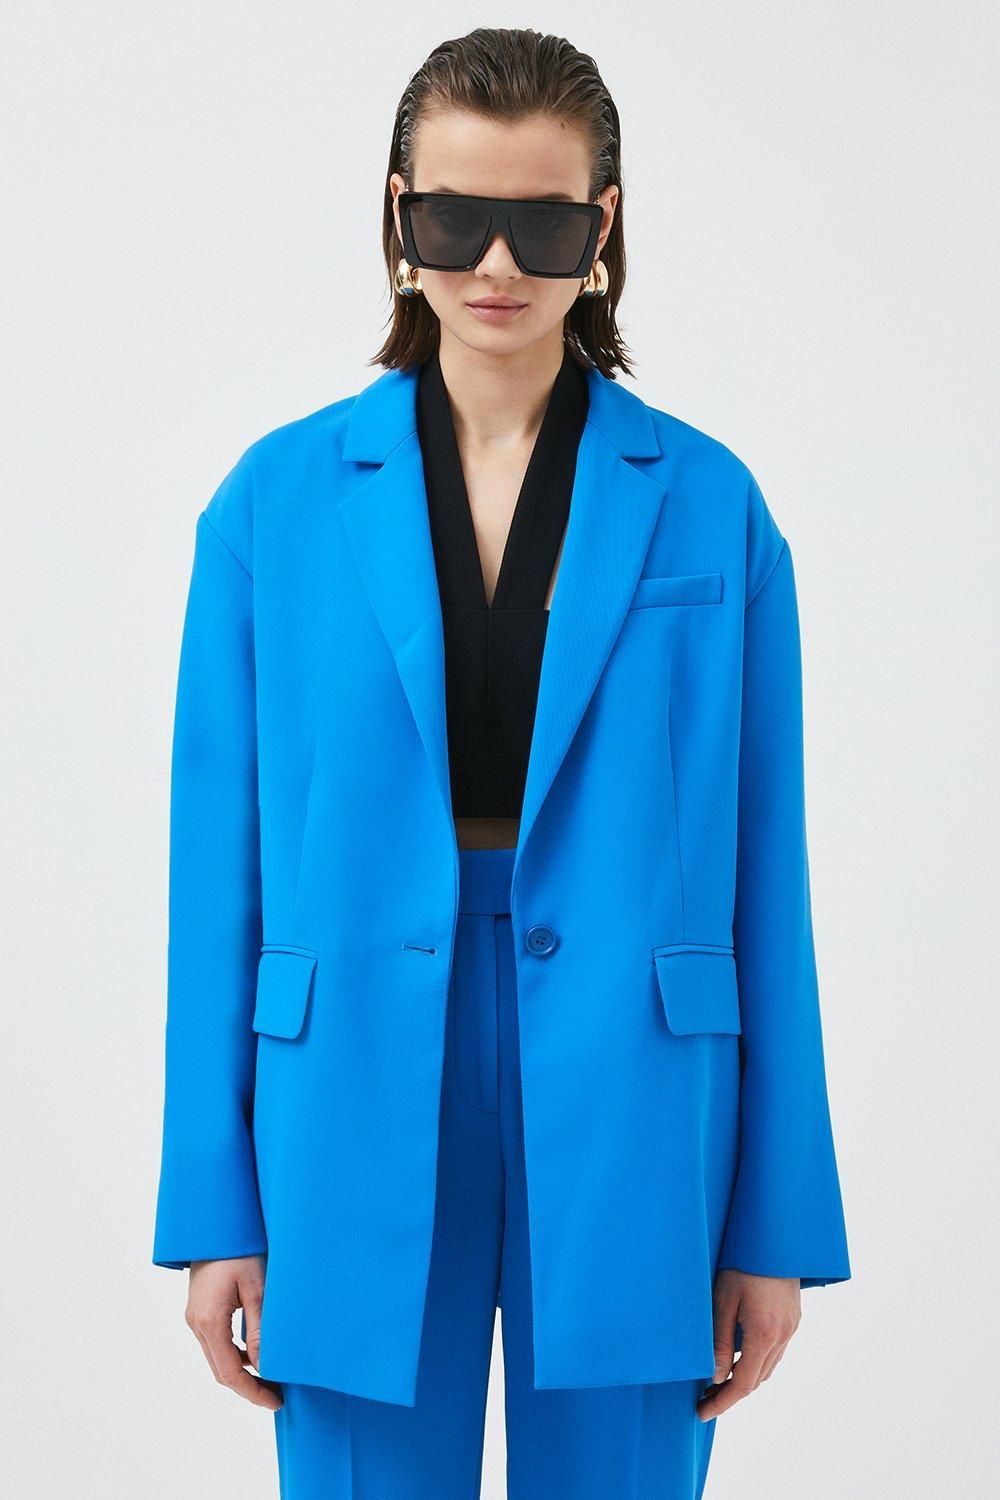 Limited Edition Oversize Soft Tailored Jacket | Karen Millen UK & IE